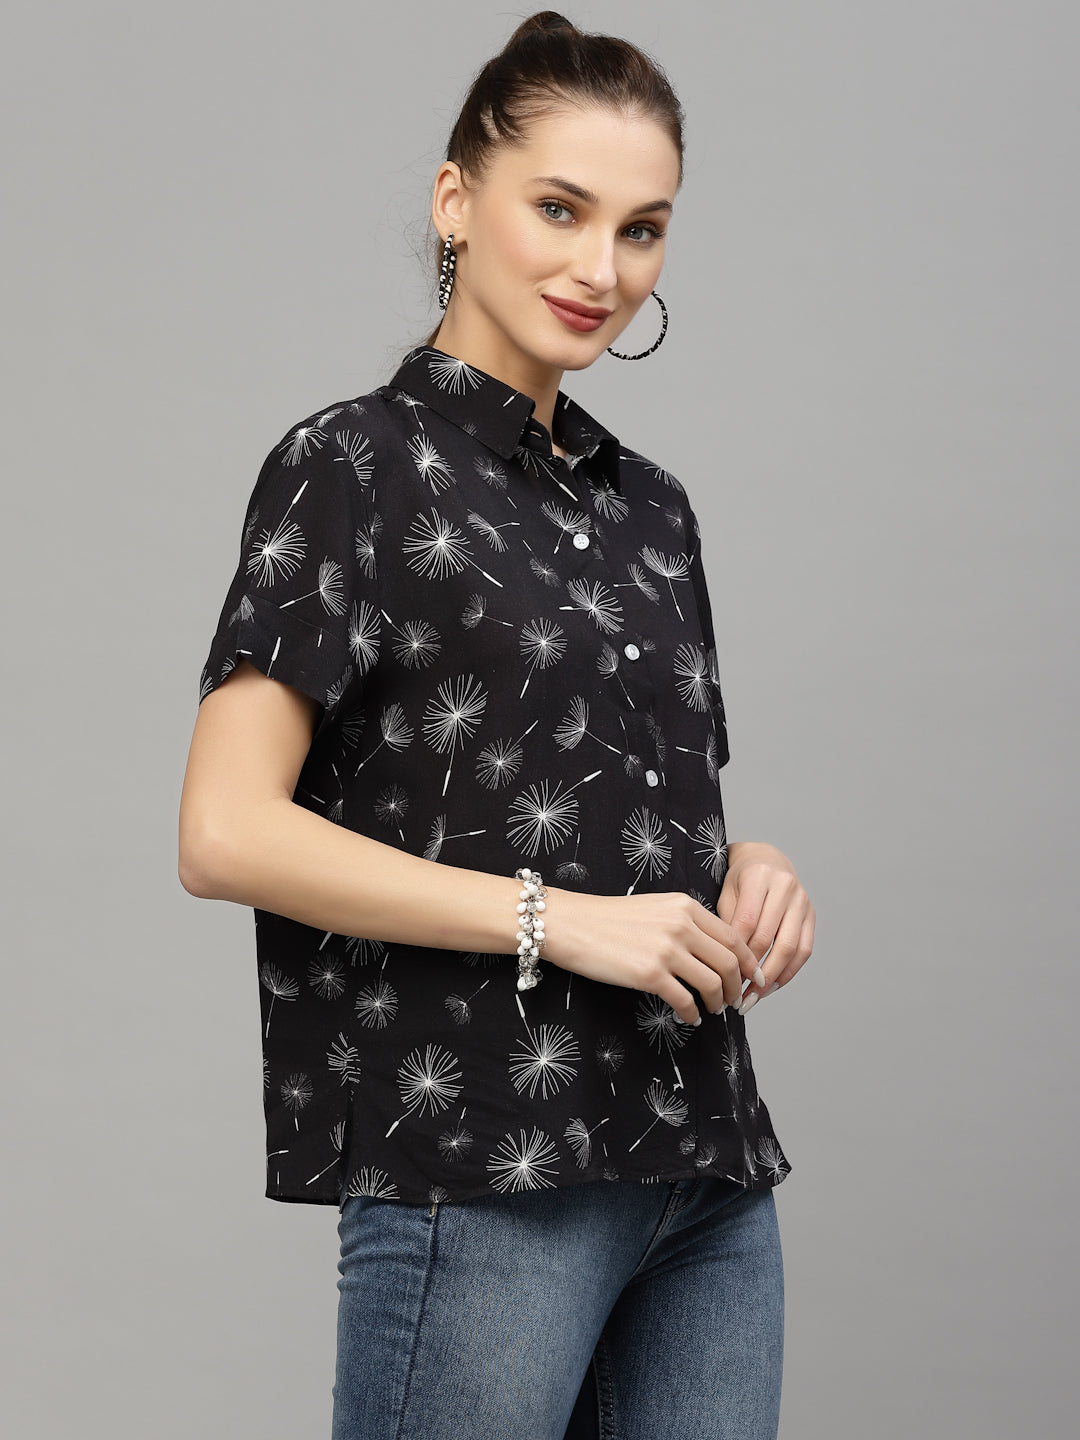 Valbone Women’s Black Modal Silk Floral Printed Shirt